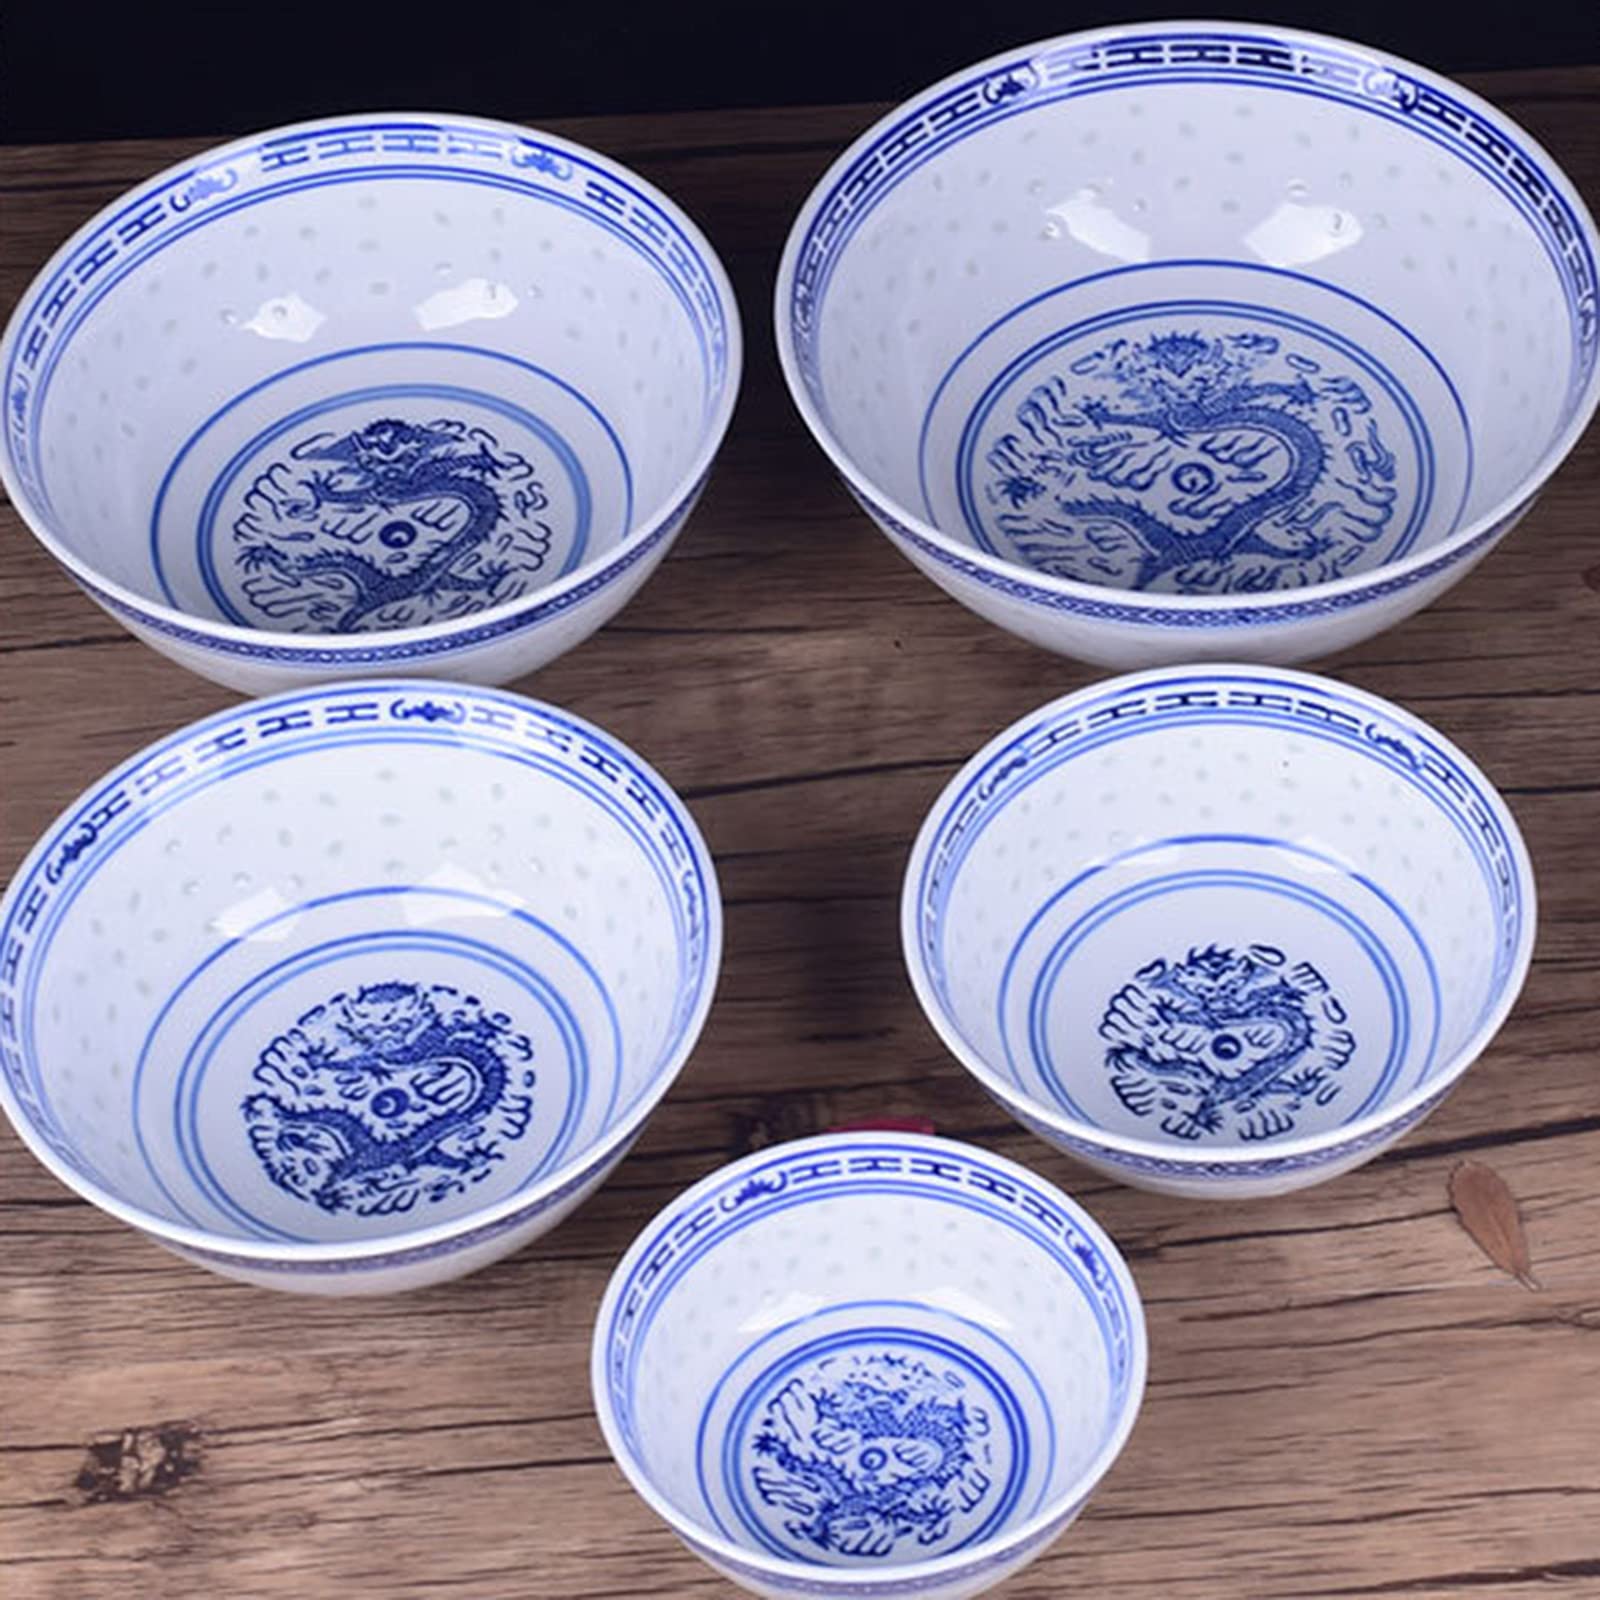 Lihuzmd Ceramic Ramen Noodle Bowls, Blue and White Porcelain Chinese Retro Dessert, Soup, Cereal, Rice, Udon, Asian Noodles Bowl,5in,2PCS